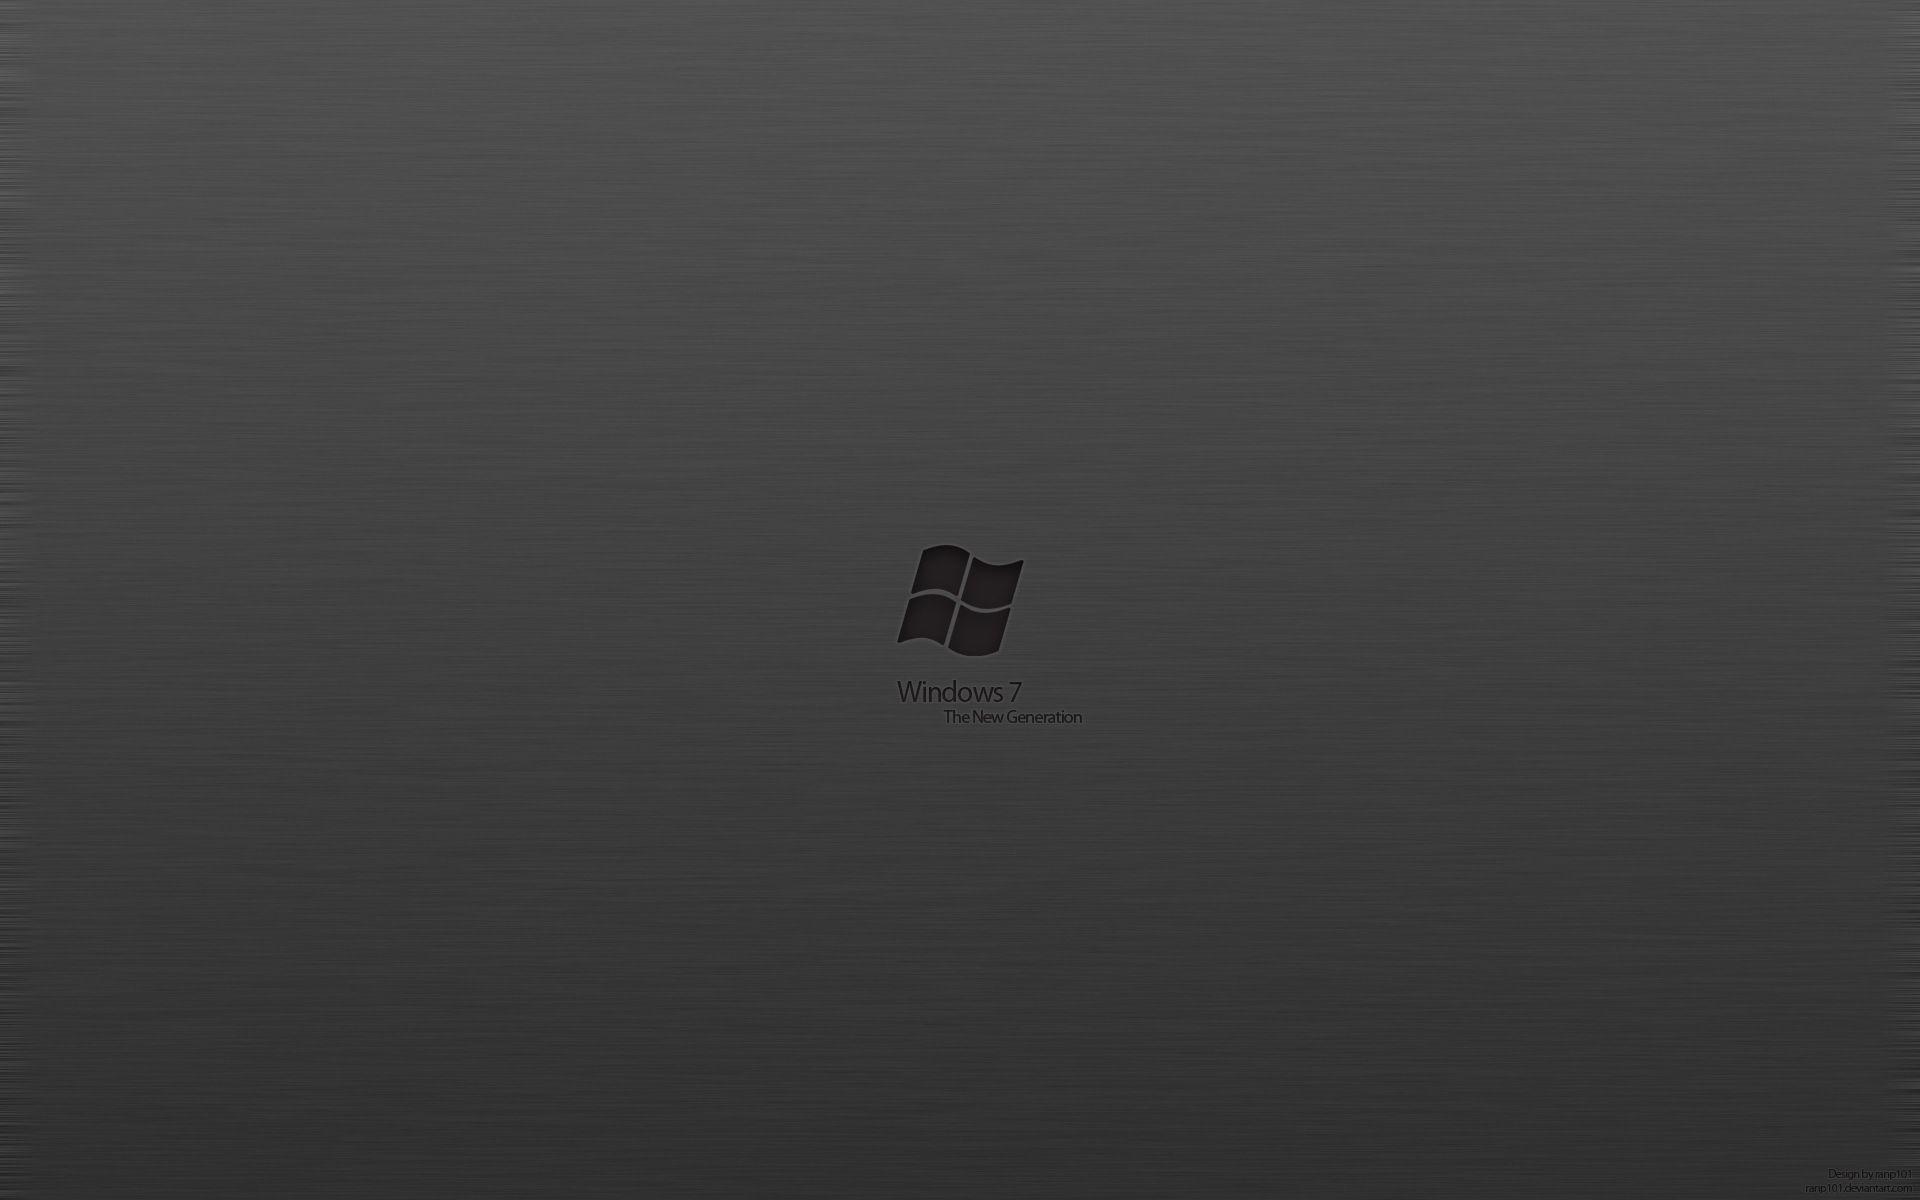 Windows7 Wallpaper. High Definition image